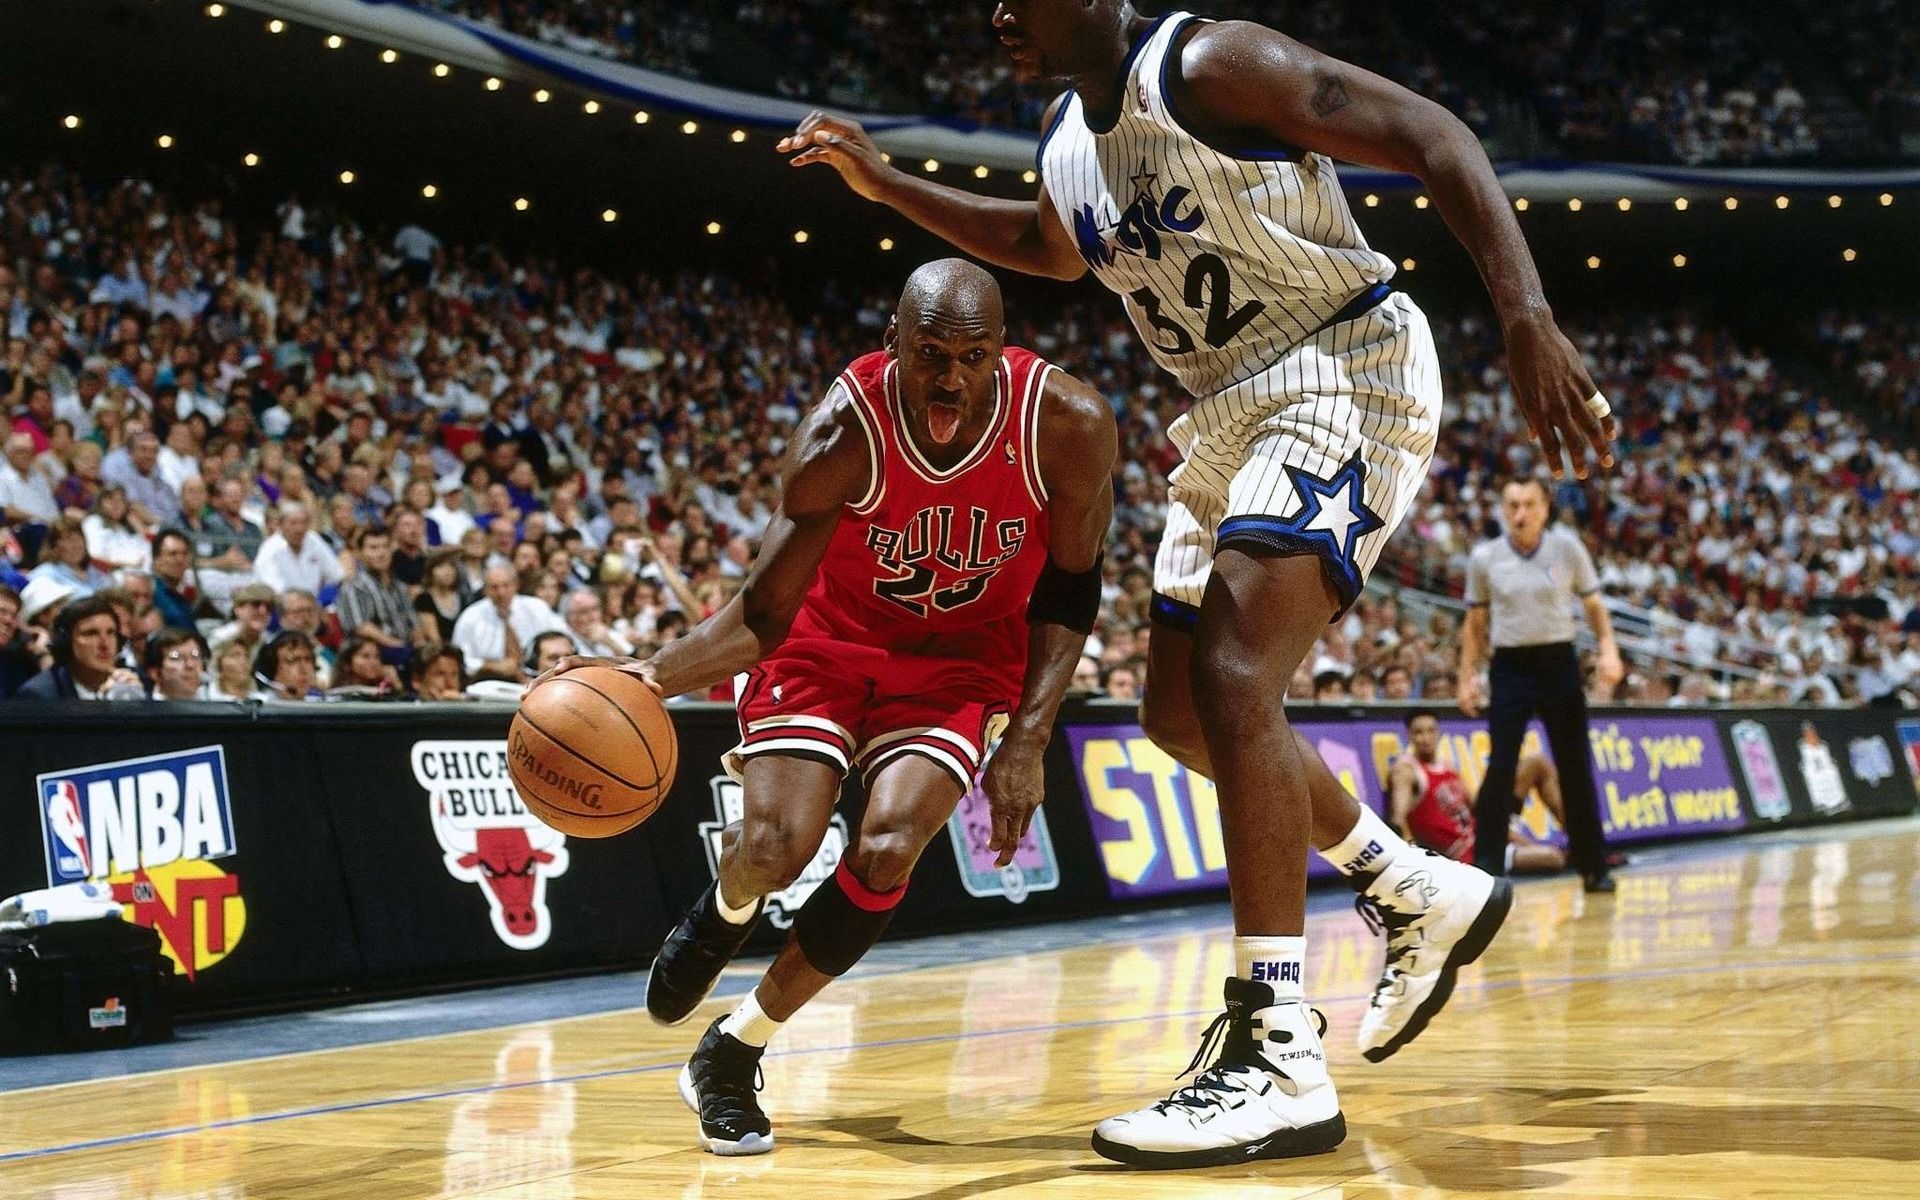 The Bulls' Michael Jordan dribbles the ball past the Magic's Shaquille O'Neal during the 1995 NBA Finals. - Michael Jordan